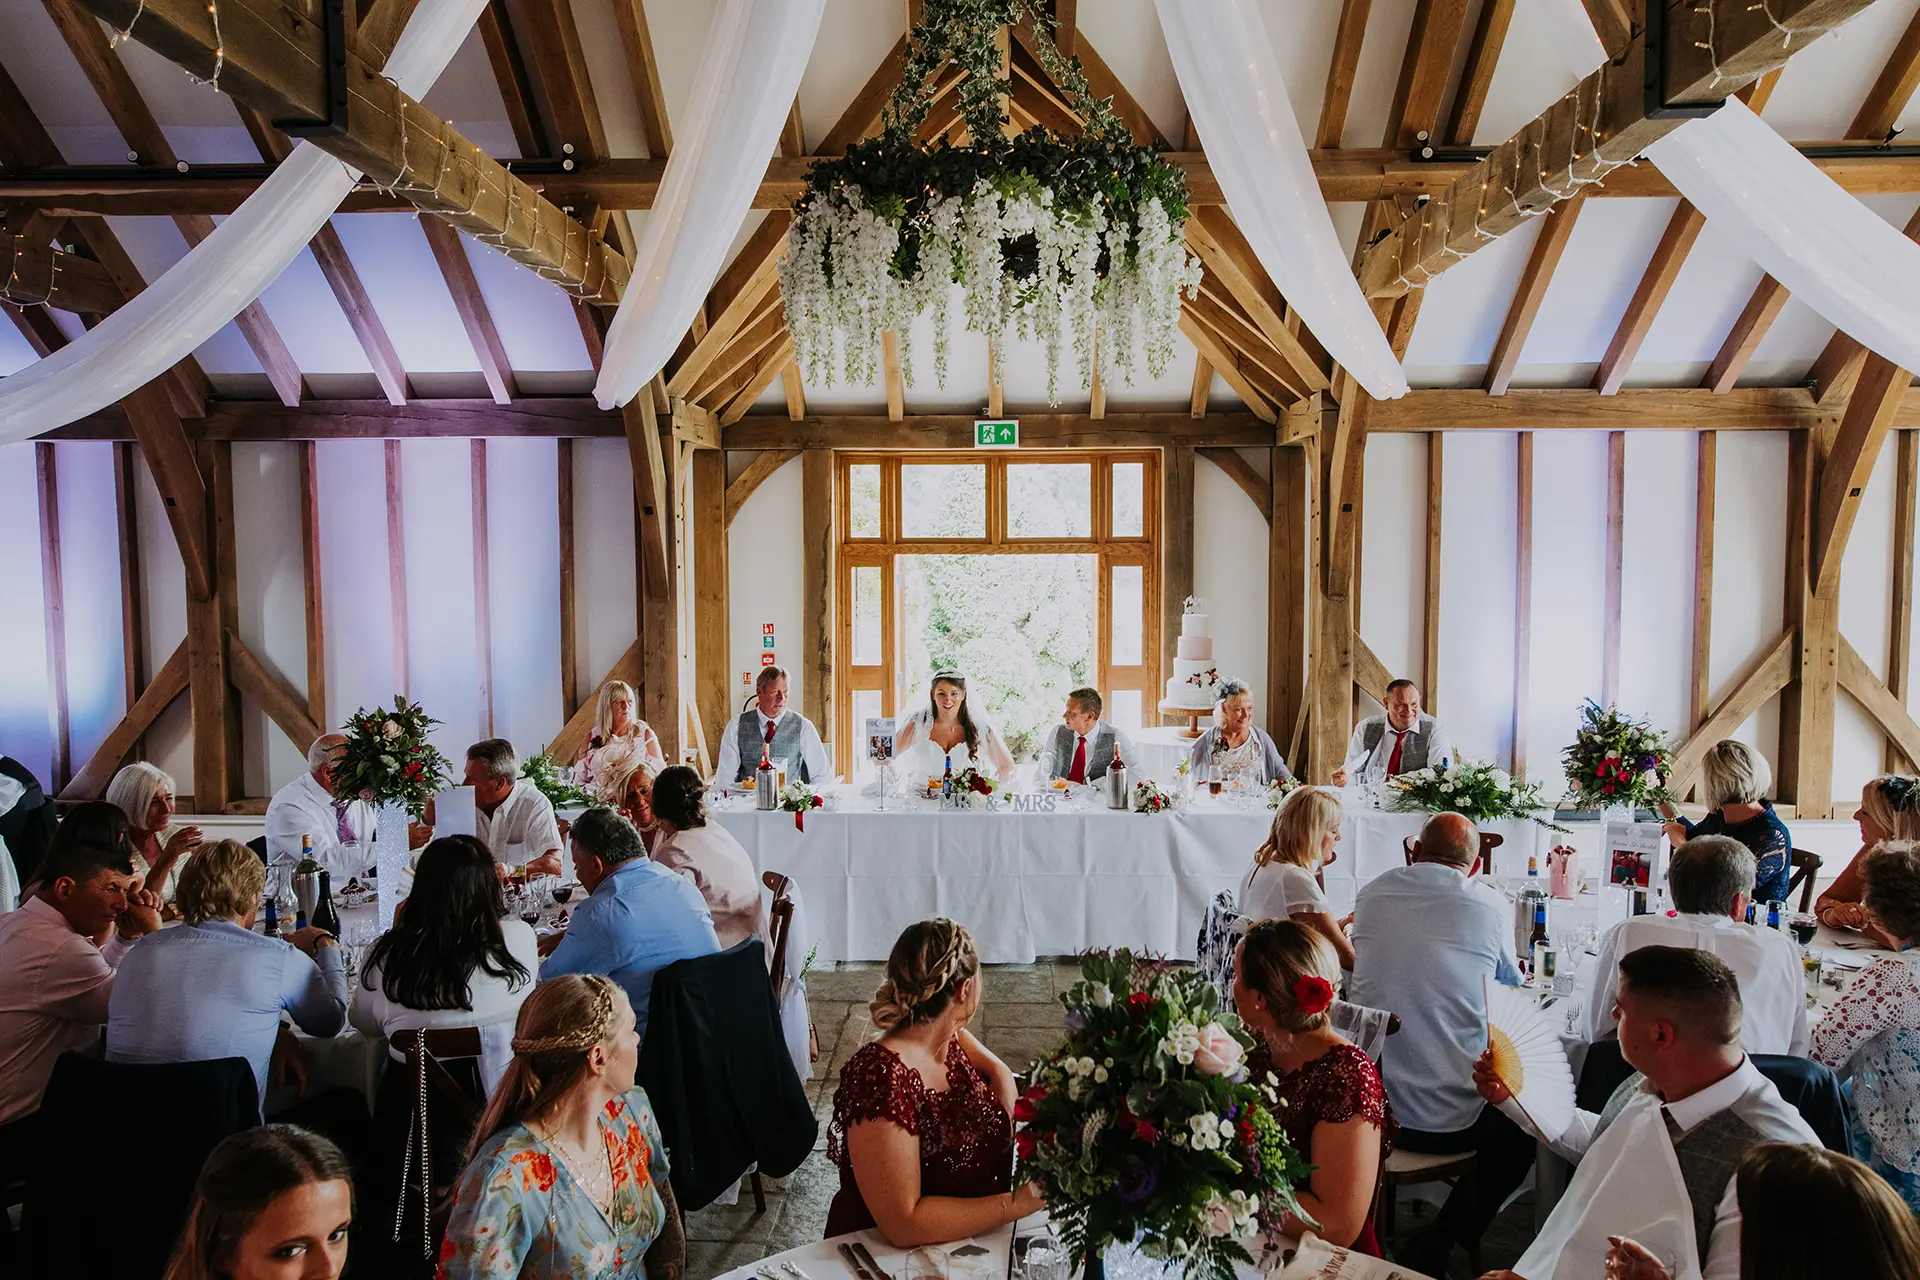 brookfield barn wedding reception top table